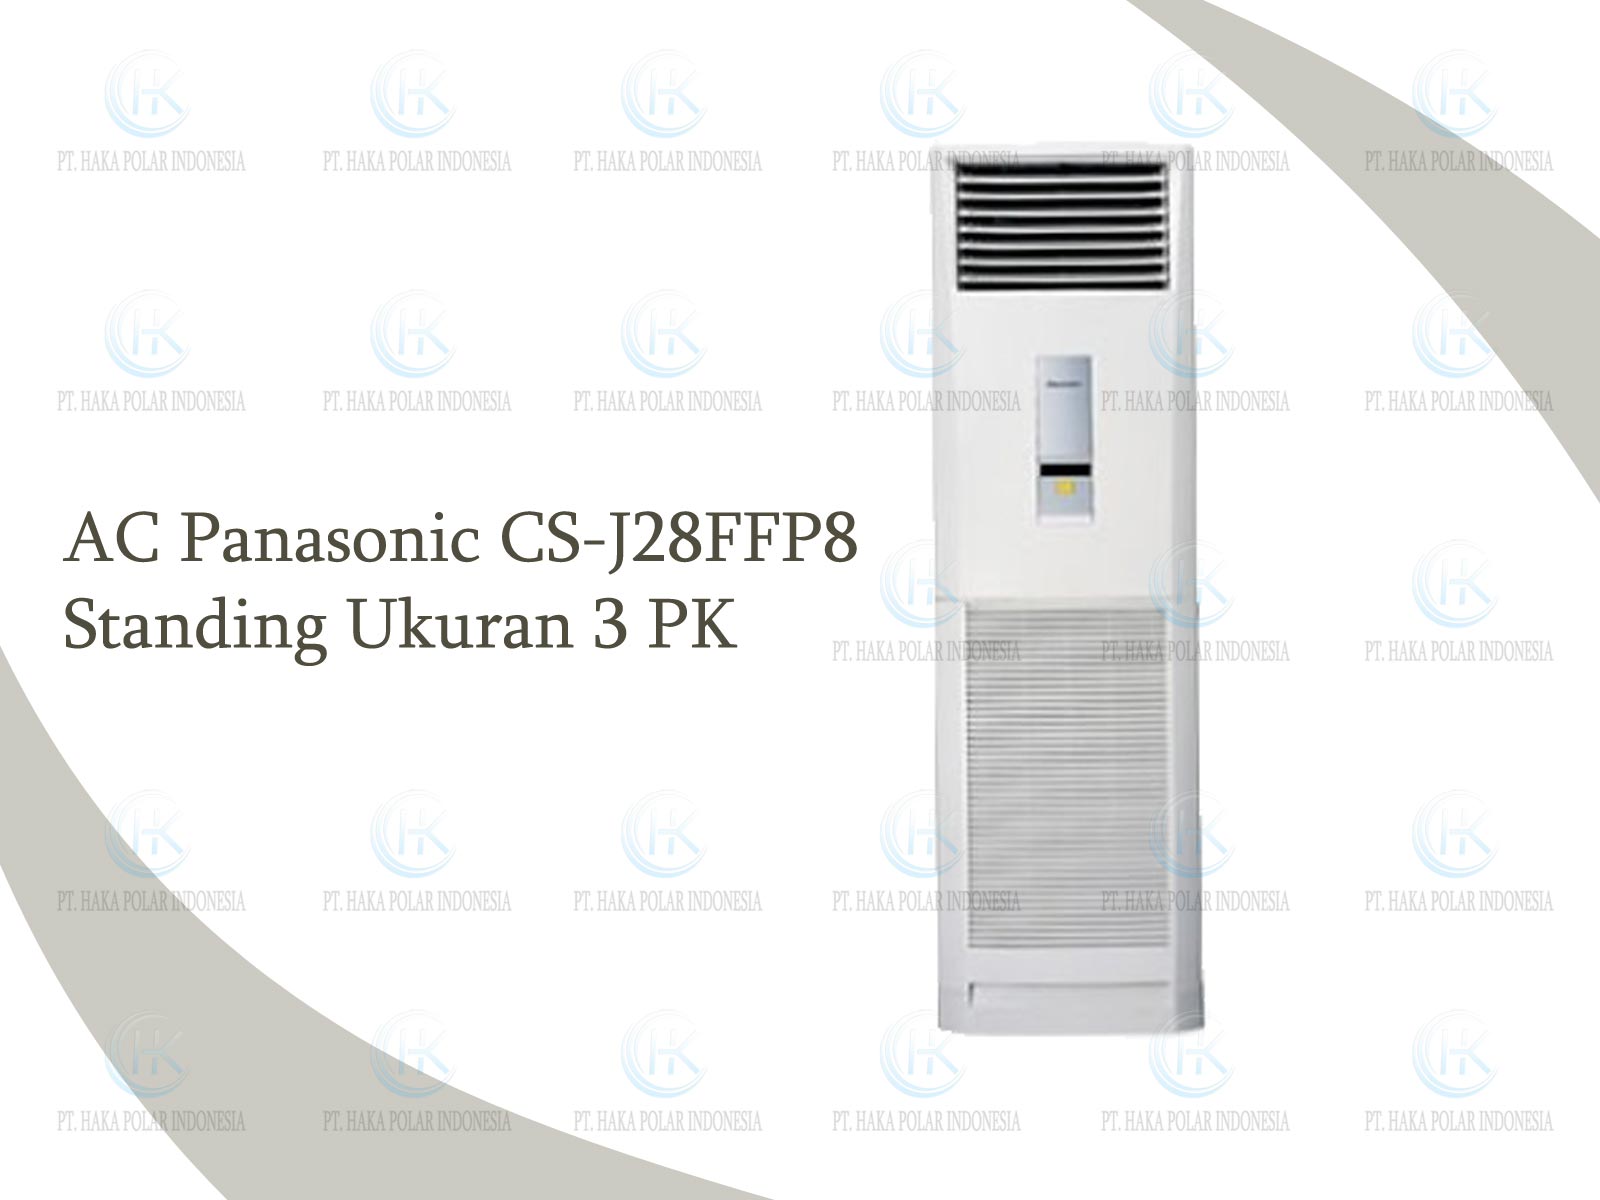 Jual AC Panasonic CS-J28FFP8 3 PK Floor Standing R410a